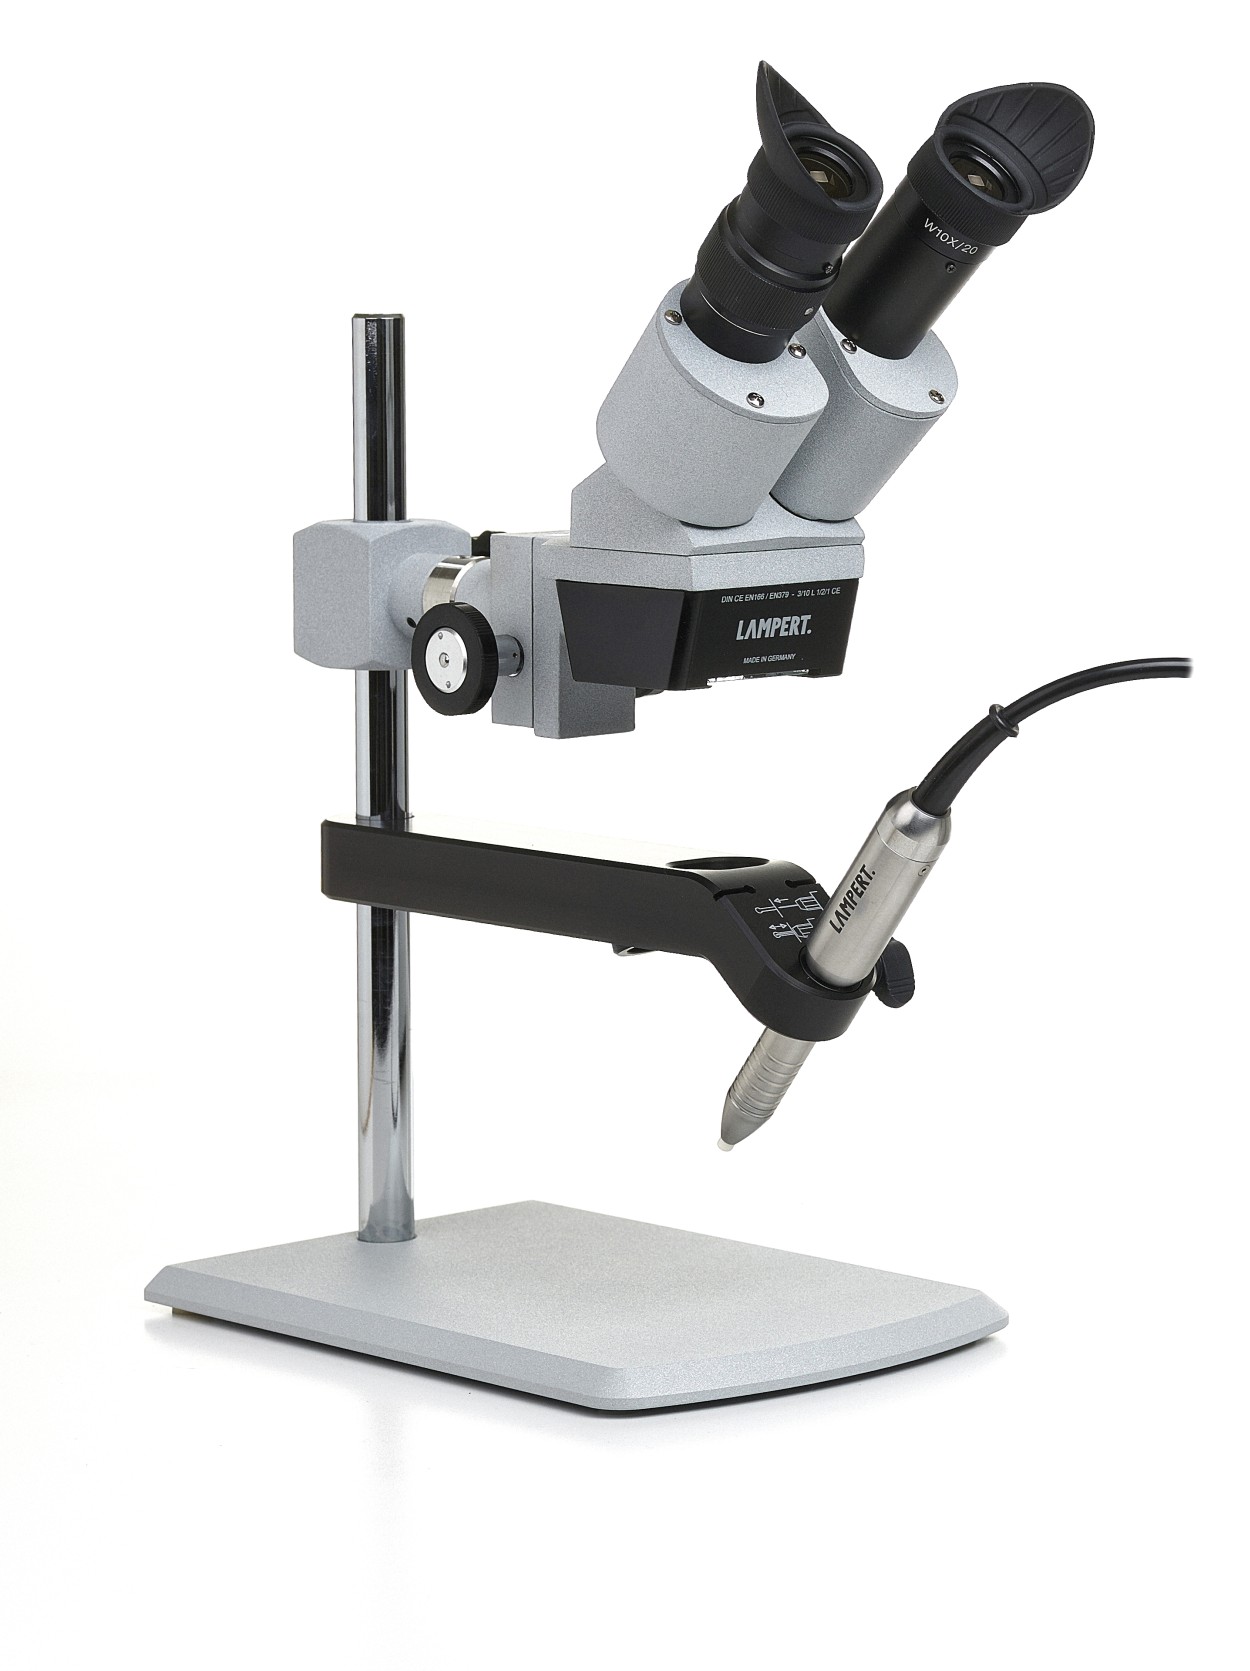 Welding microscope for PUK W420